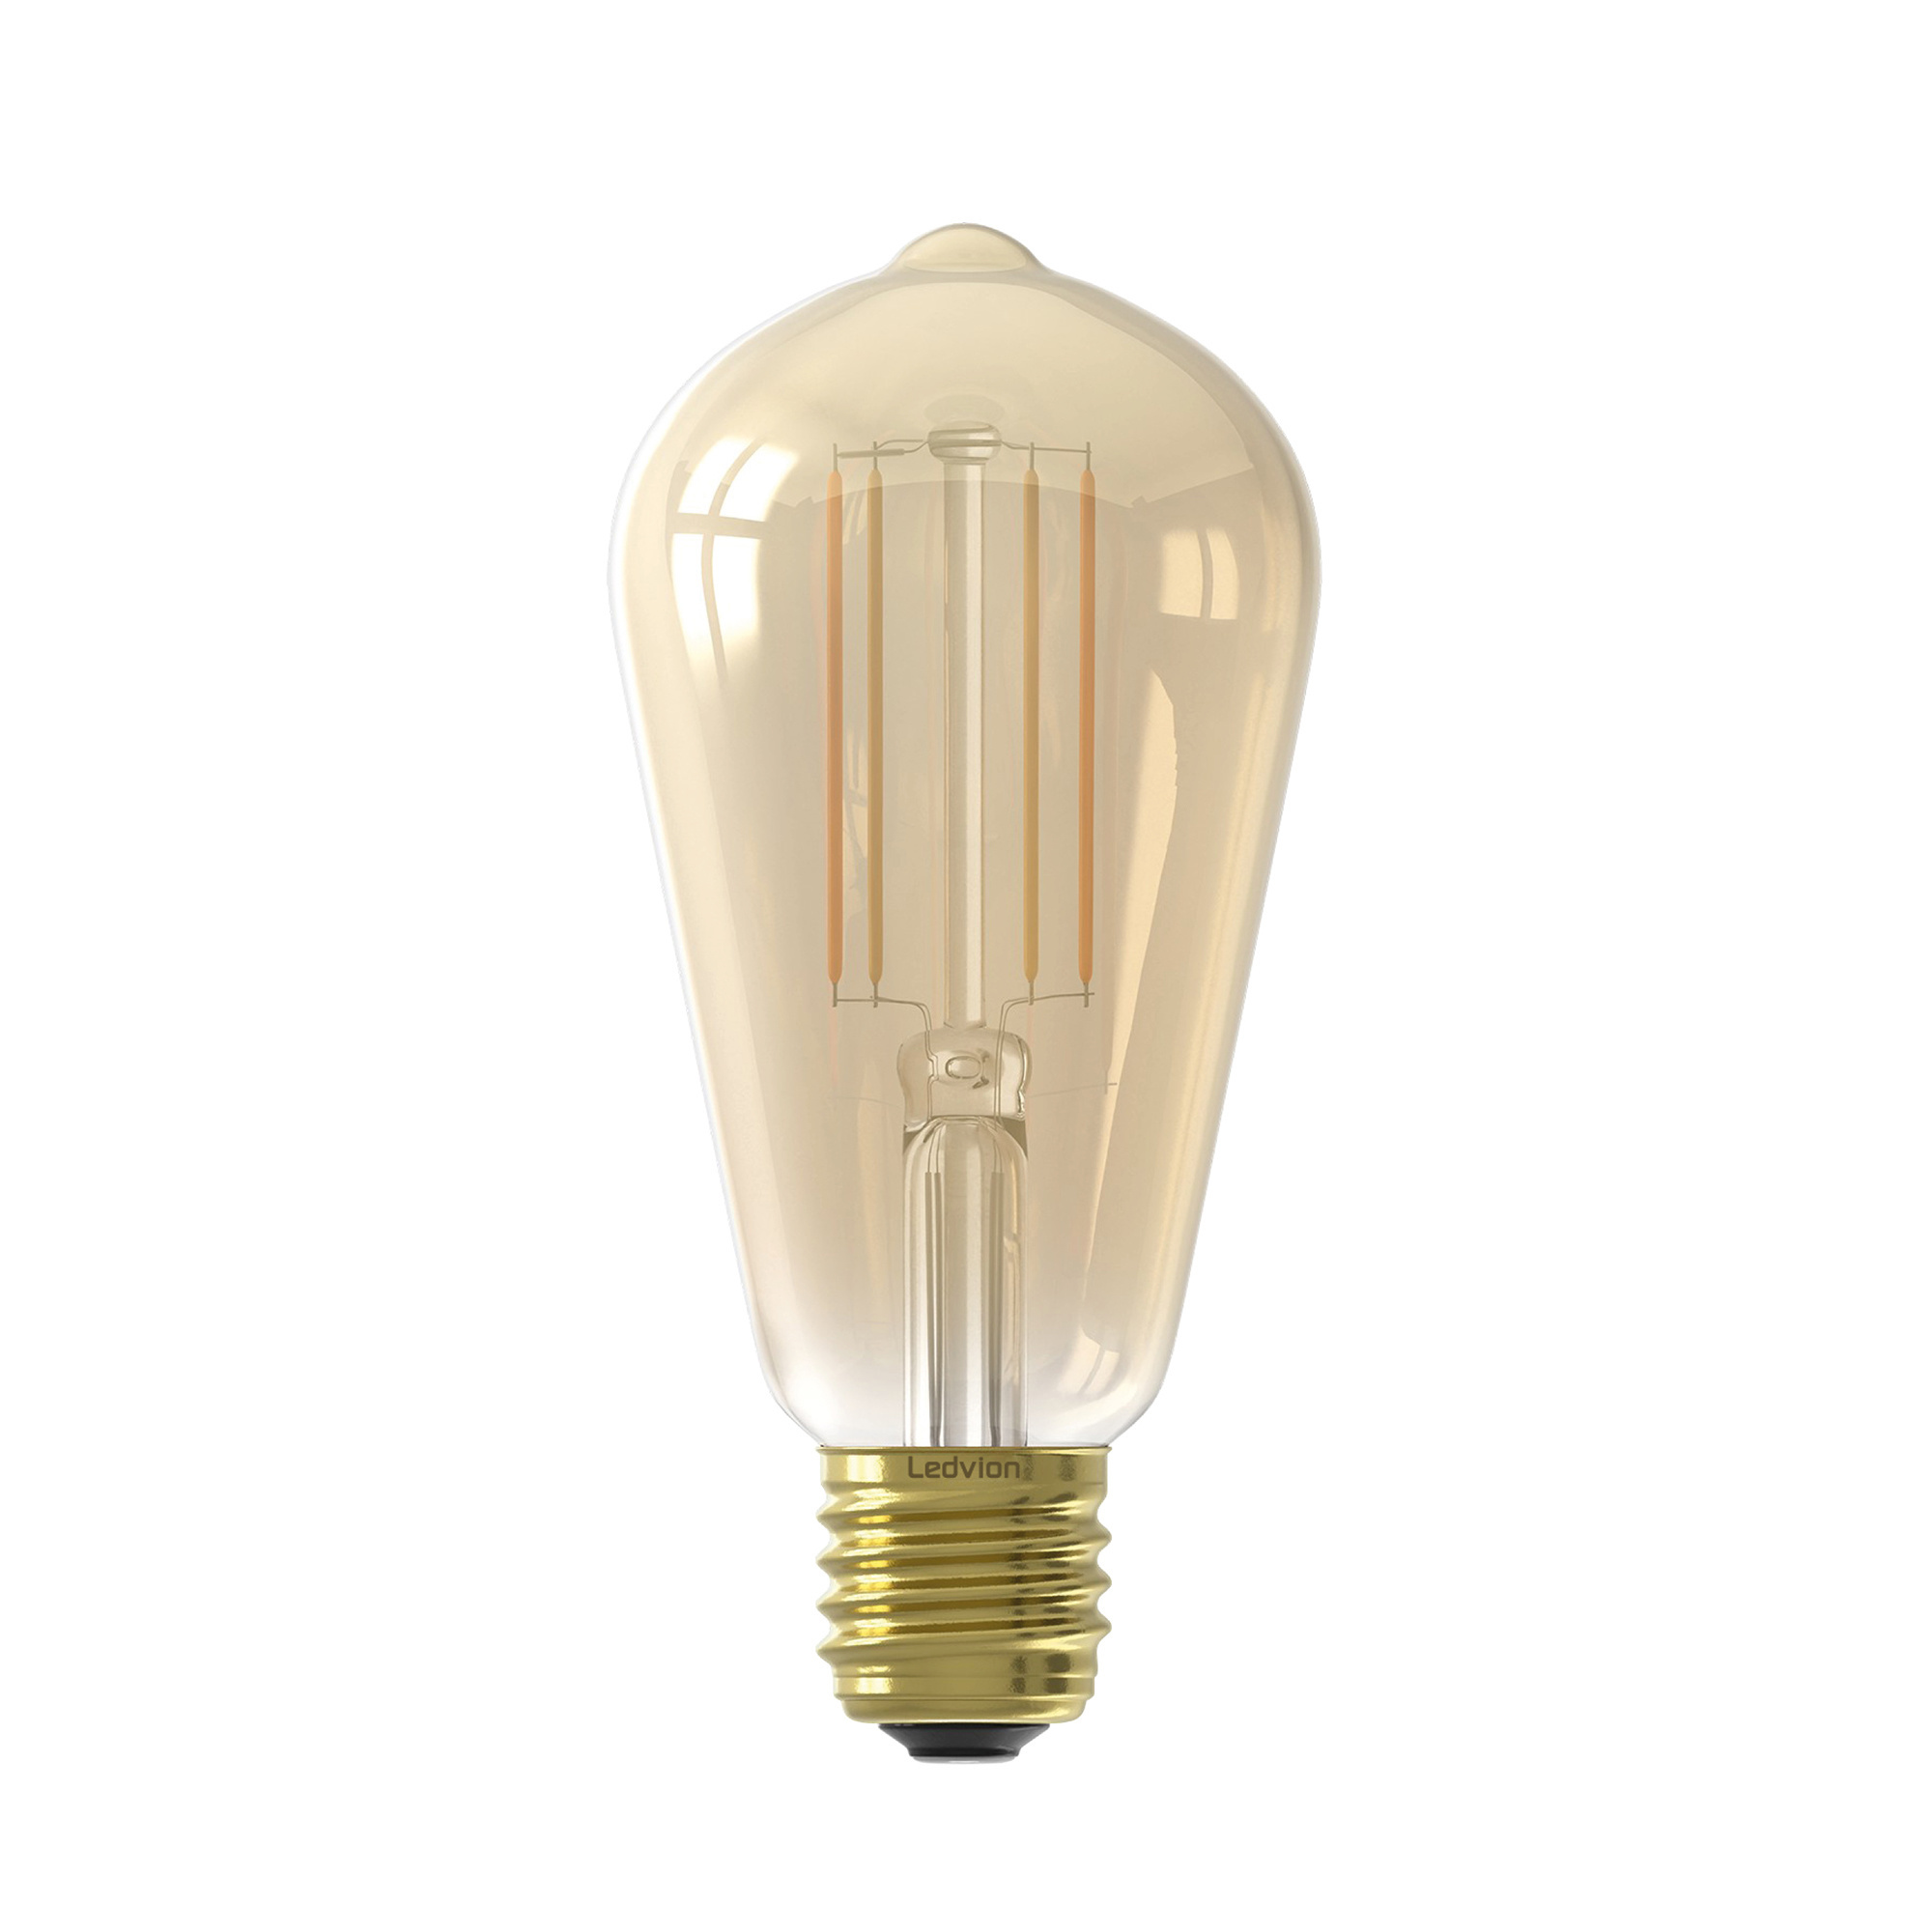 Ledvion Dimbare E27 Lamp - 4.5W - 2100K - 470 Lumen - Lightexpert.nl